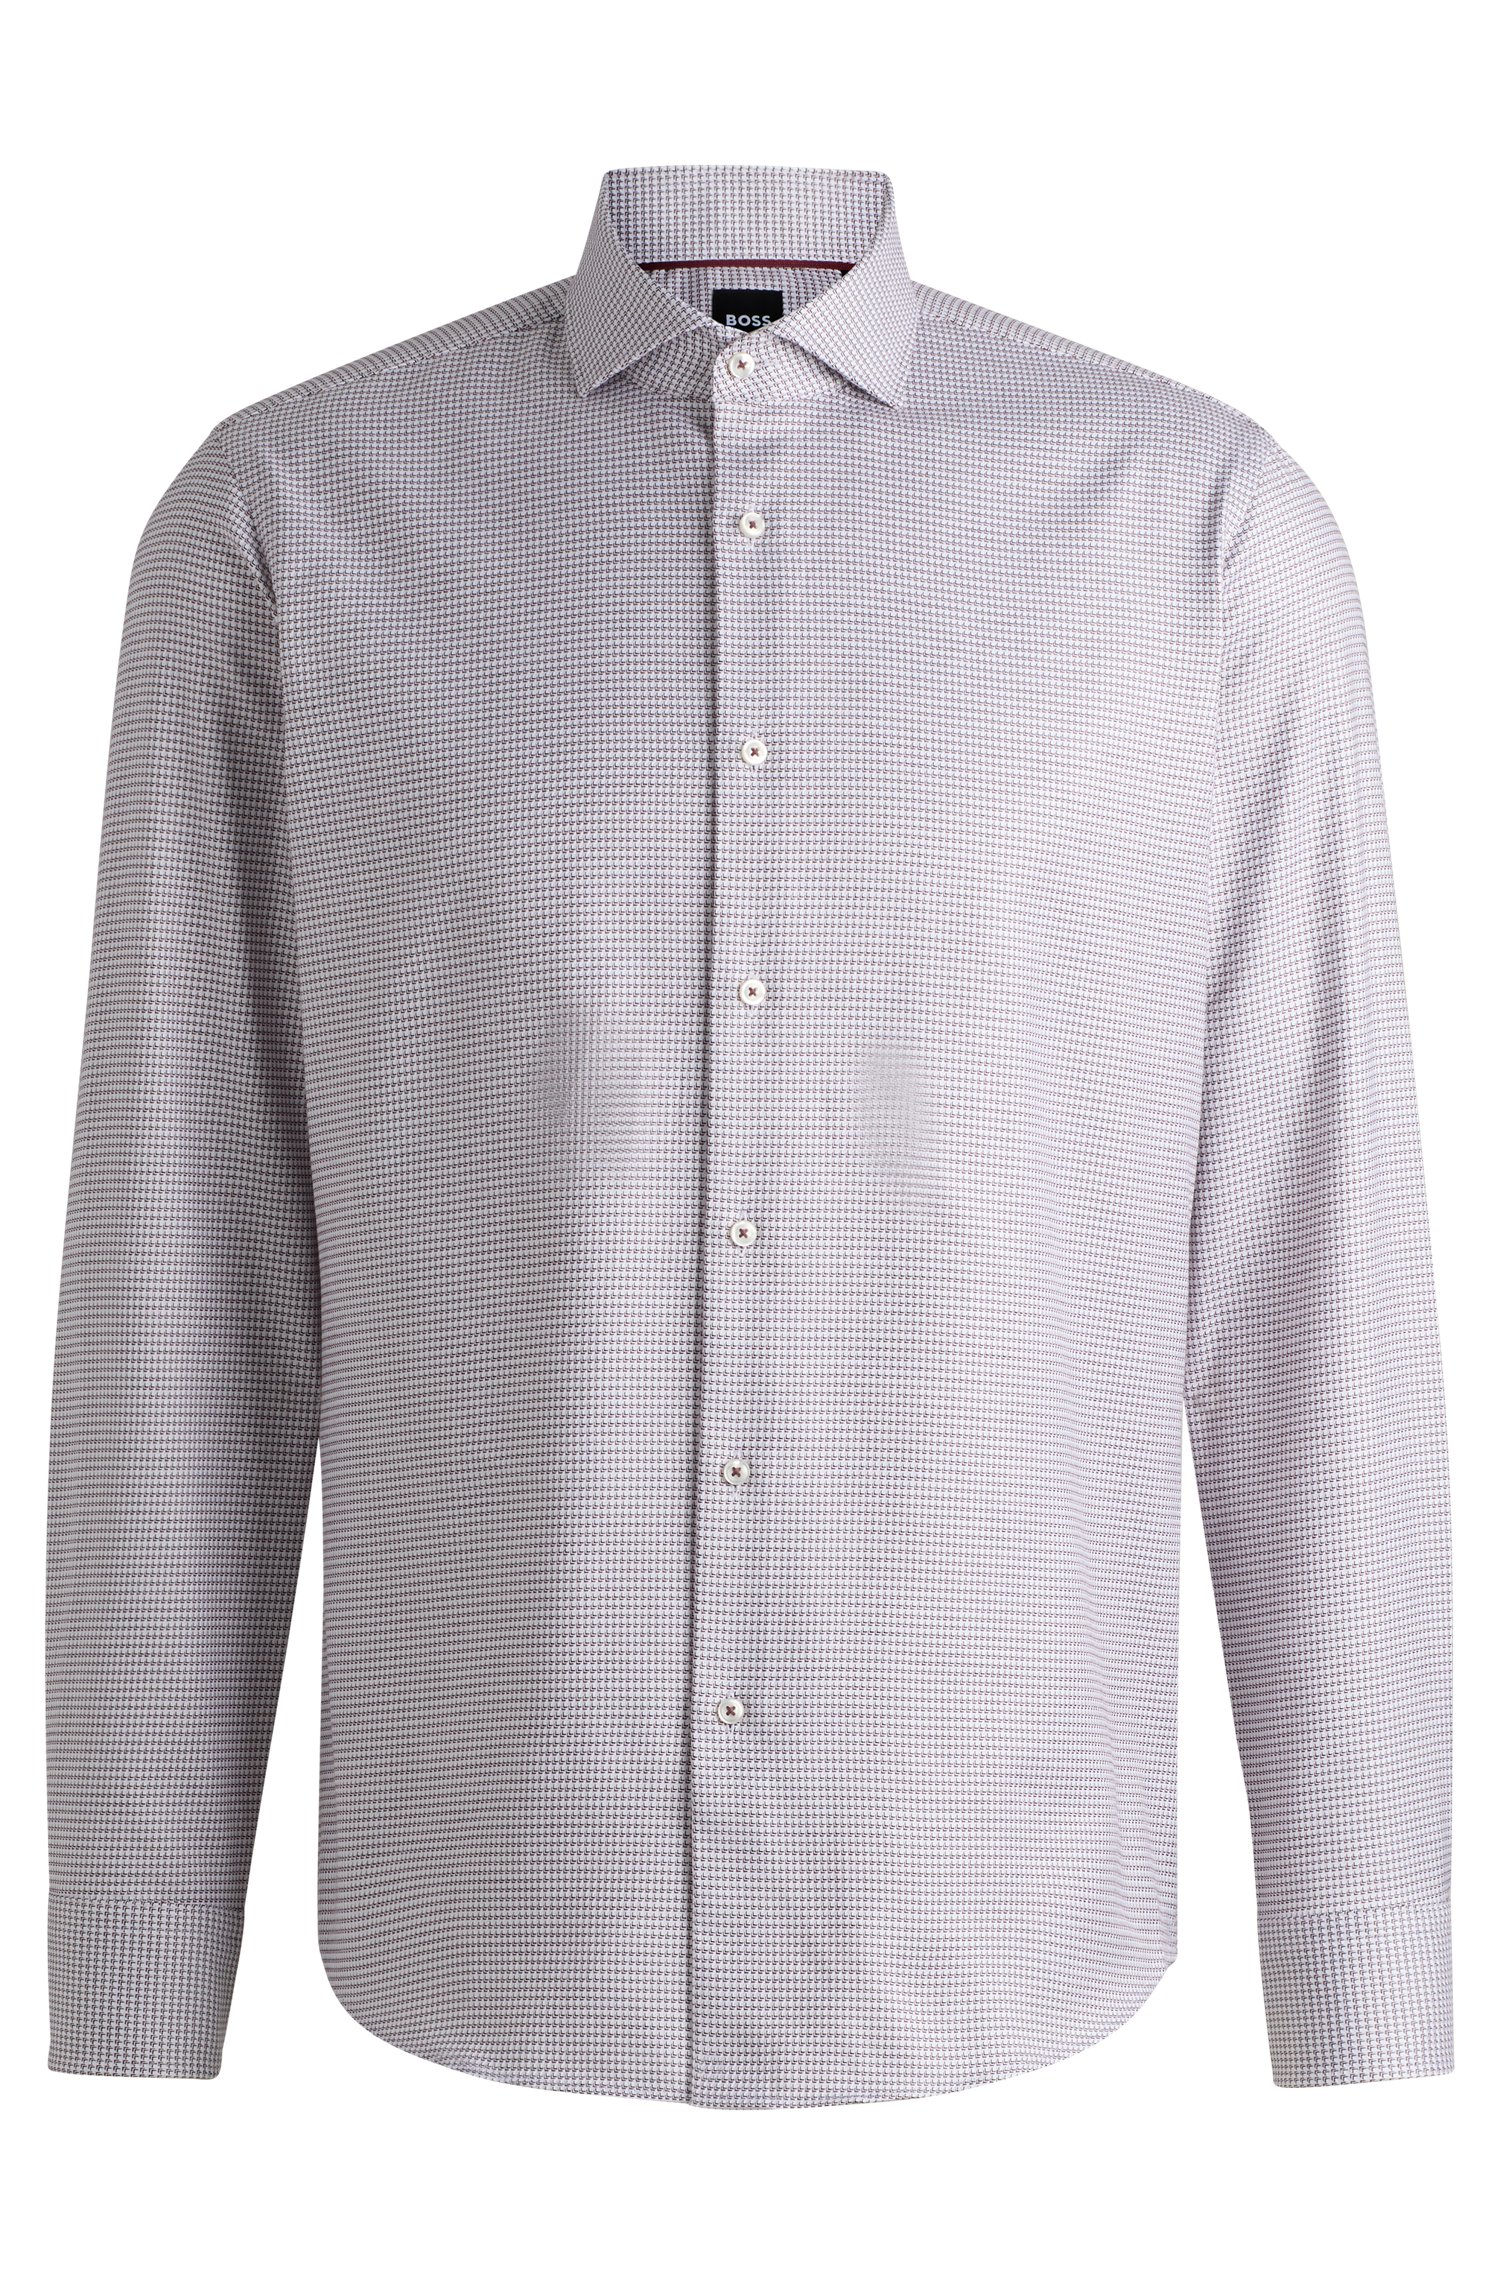 Regular-fit shirt structured cotton twill